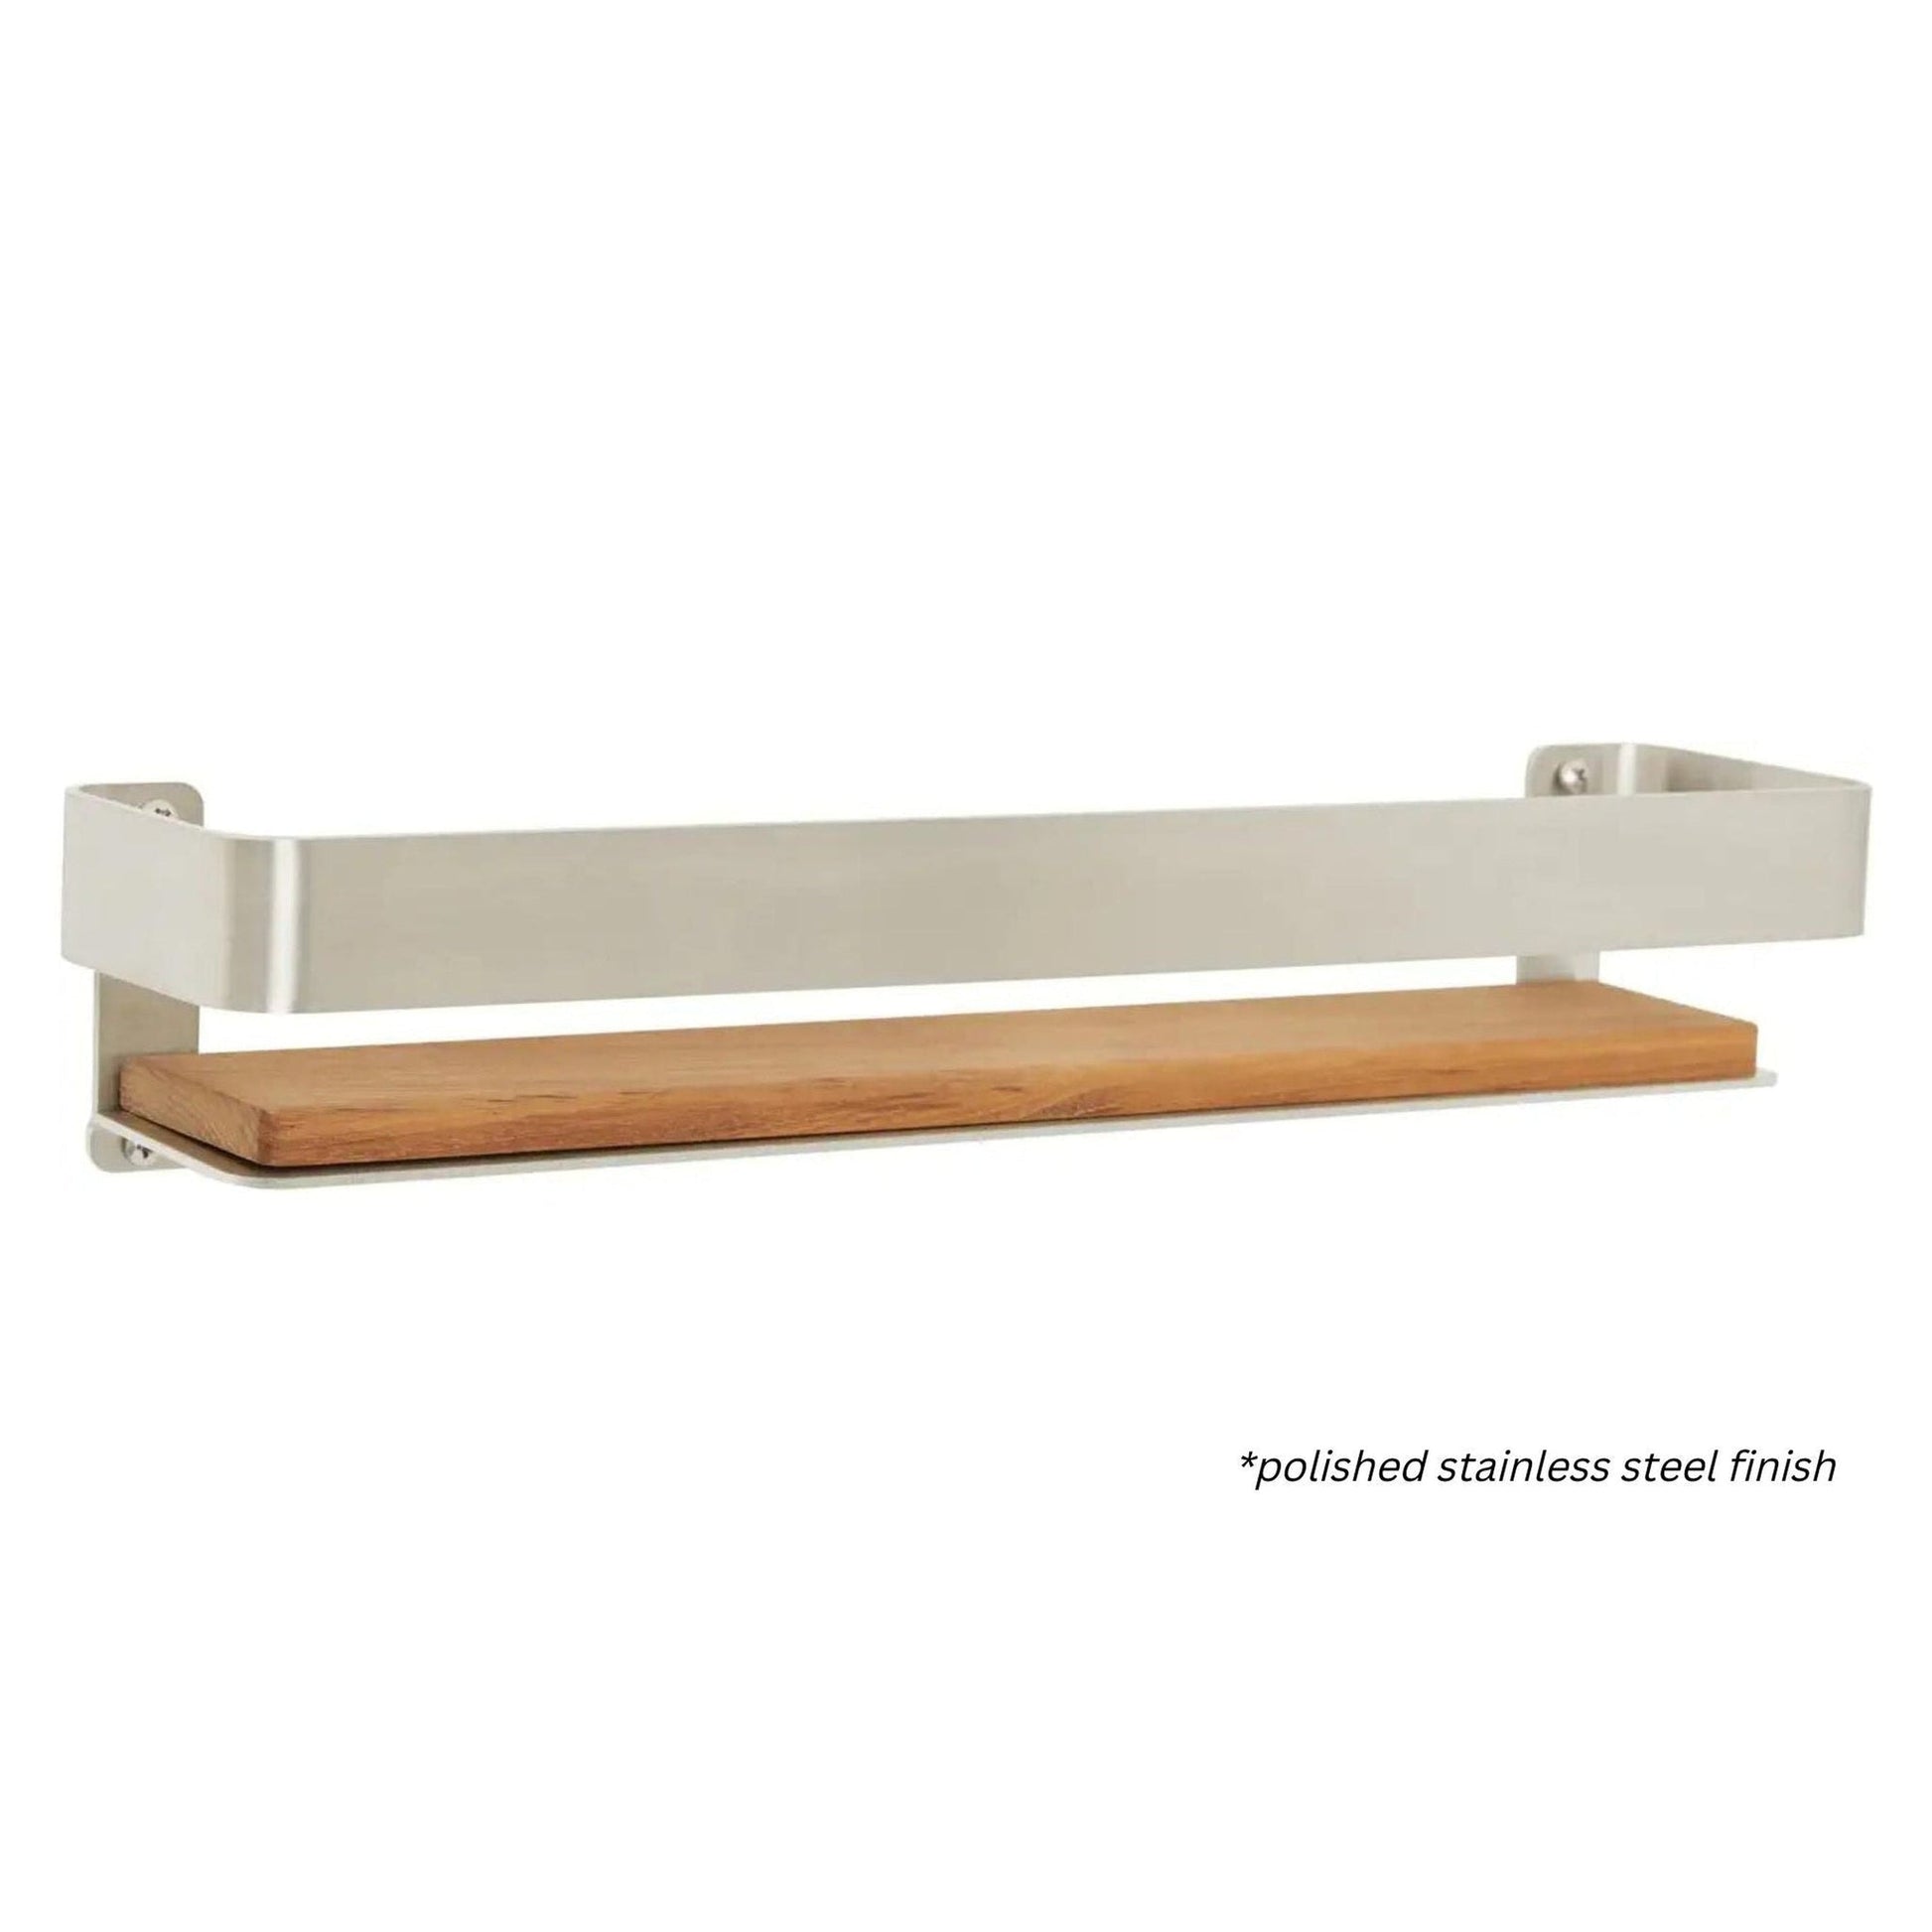 Seachrome Coronado 700 Series 18" x 4" Rectangular Shower Shelf With Rail in Black Powder Coated Finish Stainless Steel and Natural Teak Wood Insert